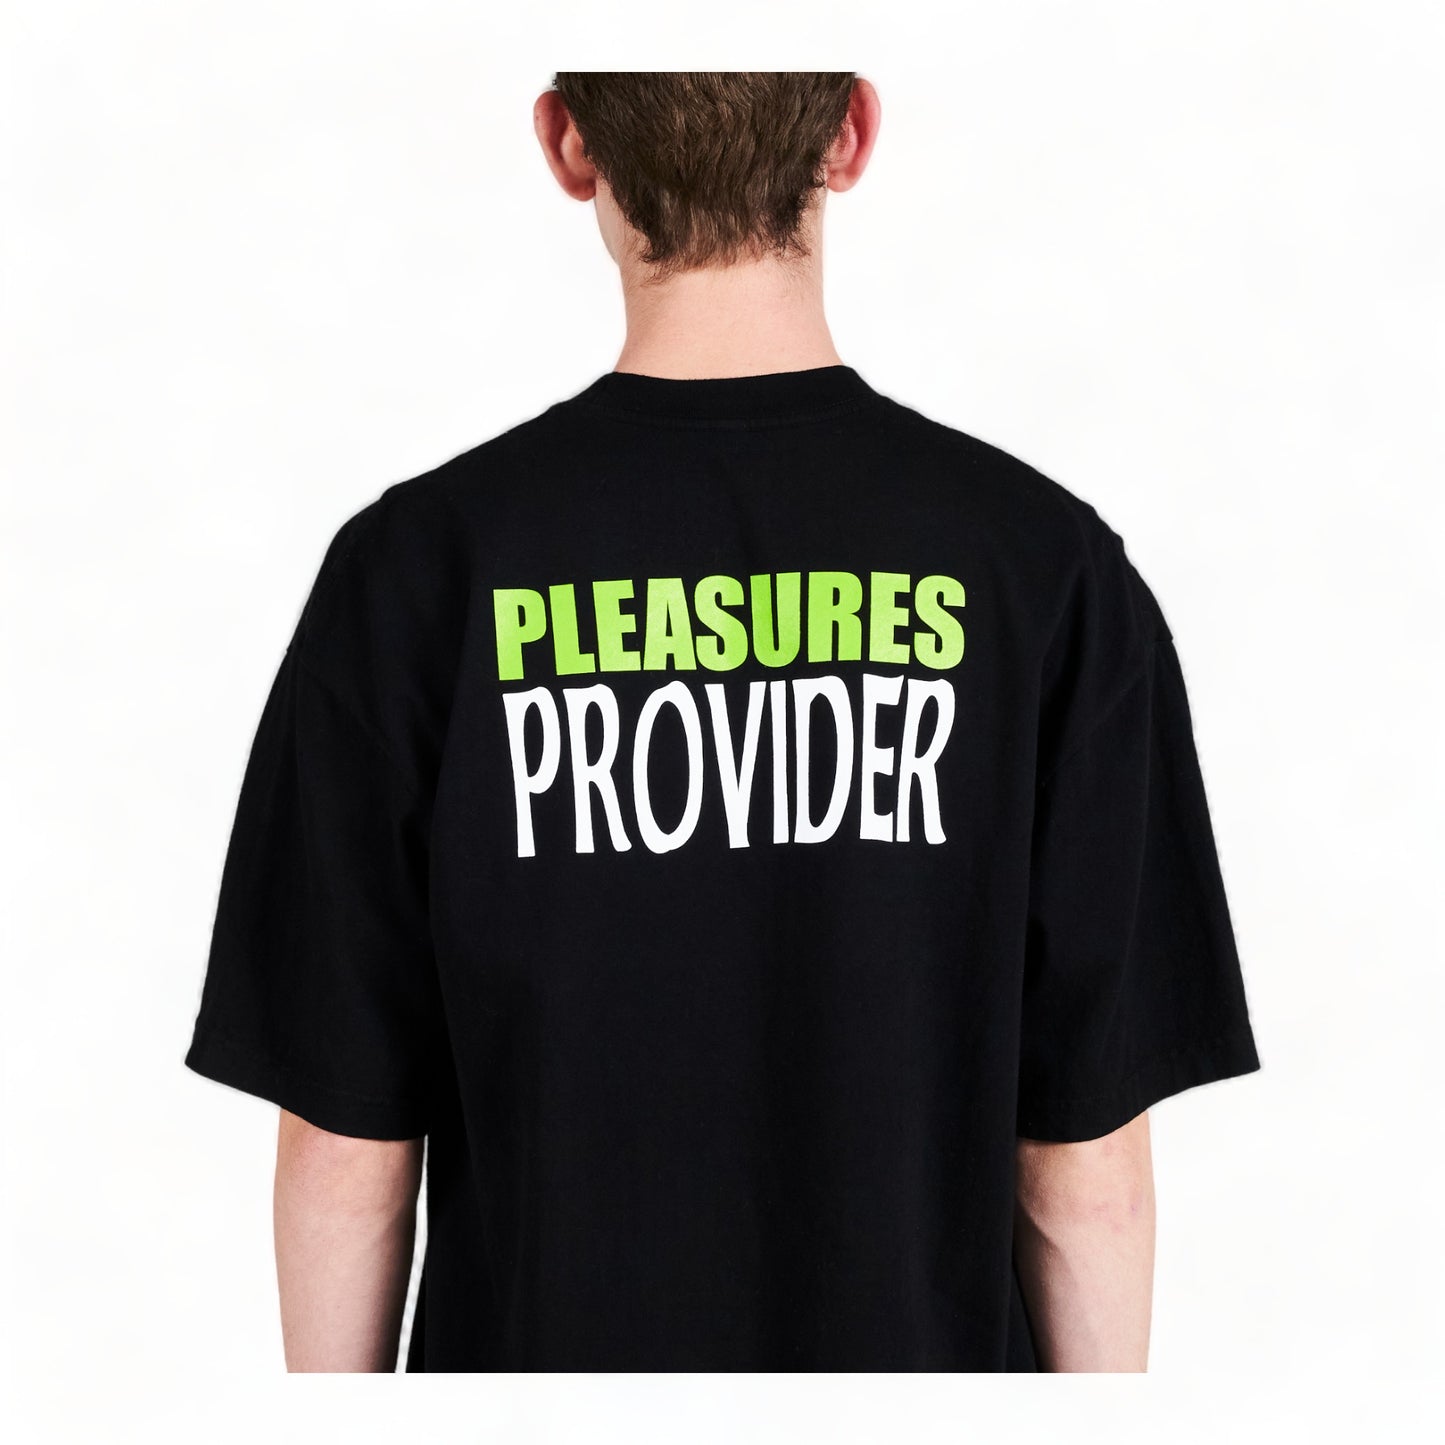 PLEASURES PROVIDER T-SHIRT